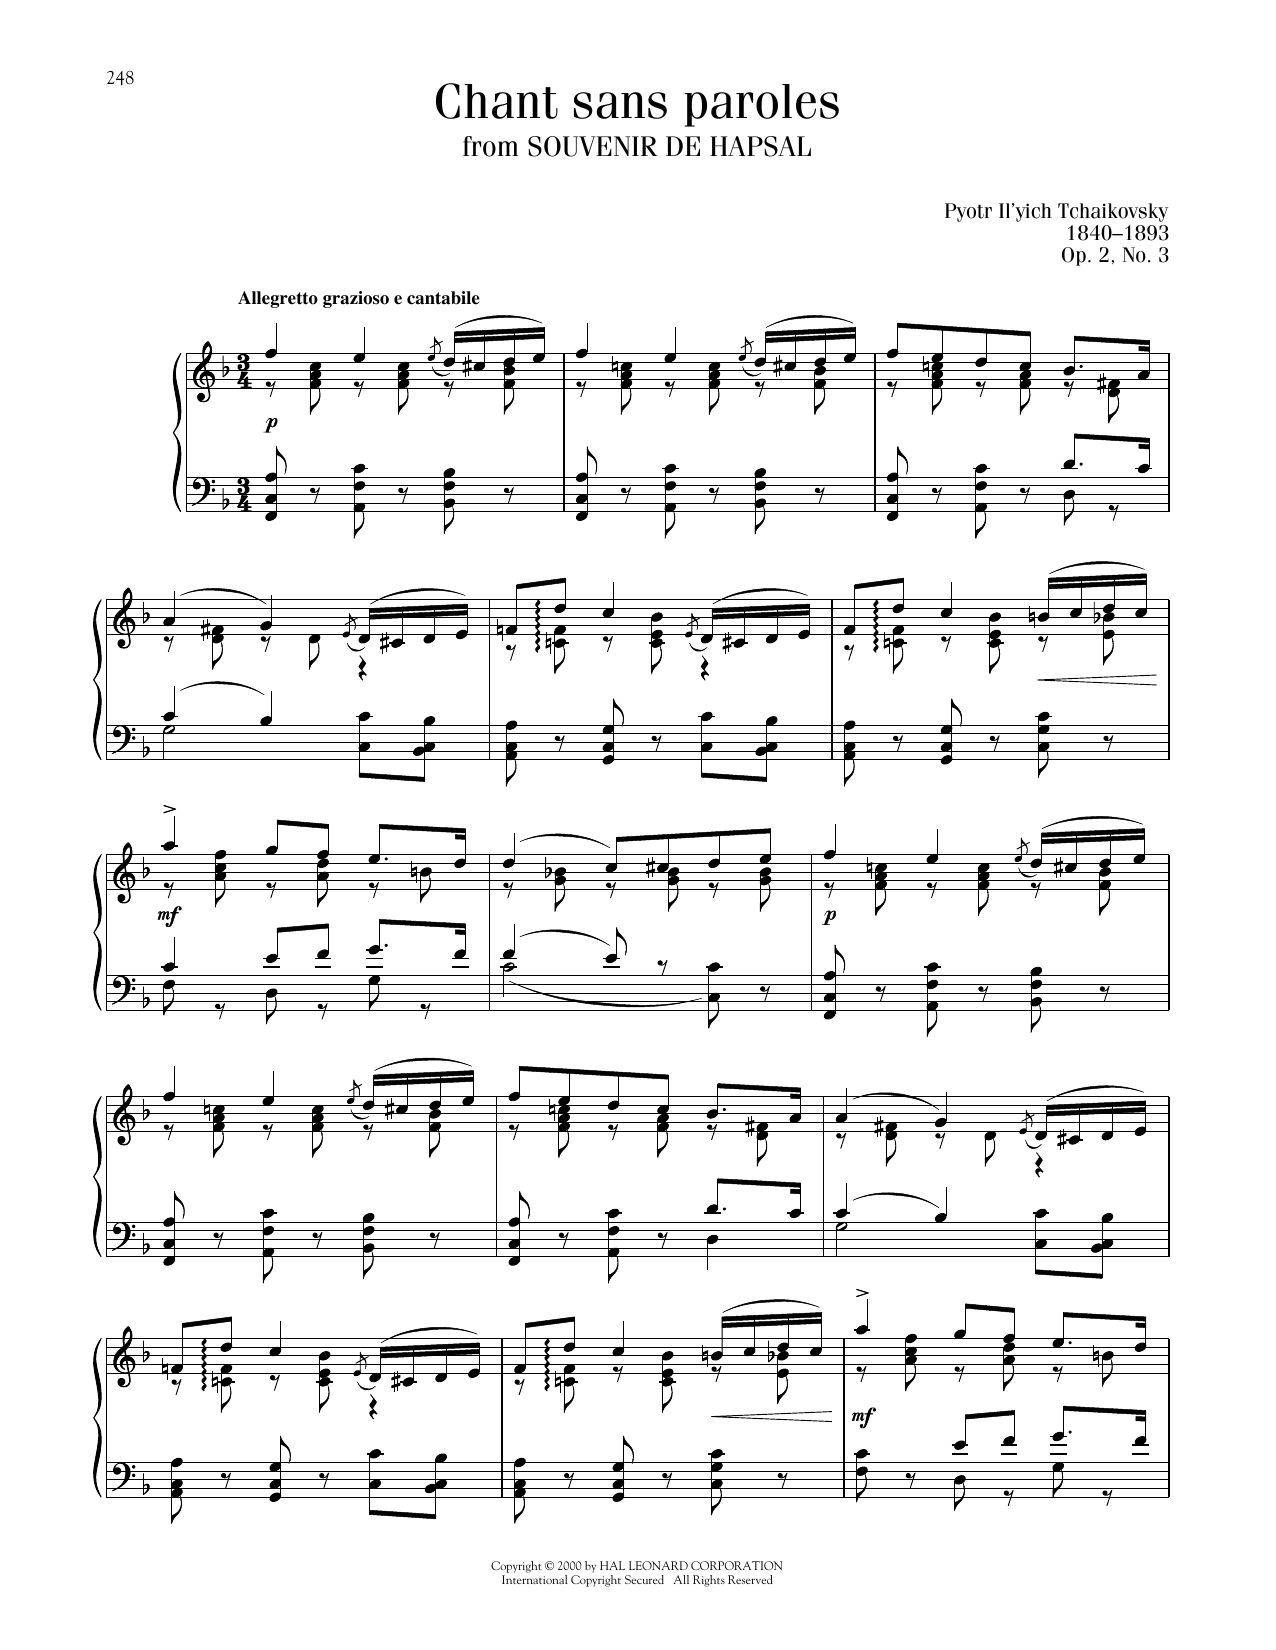 Pyotr Il'yich Tchaikovsky Chant Sans Paroles, Op. 2, No. 3 sheet music notes printable PDF score